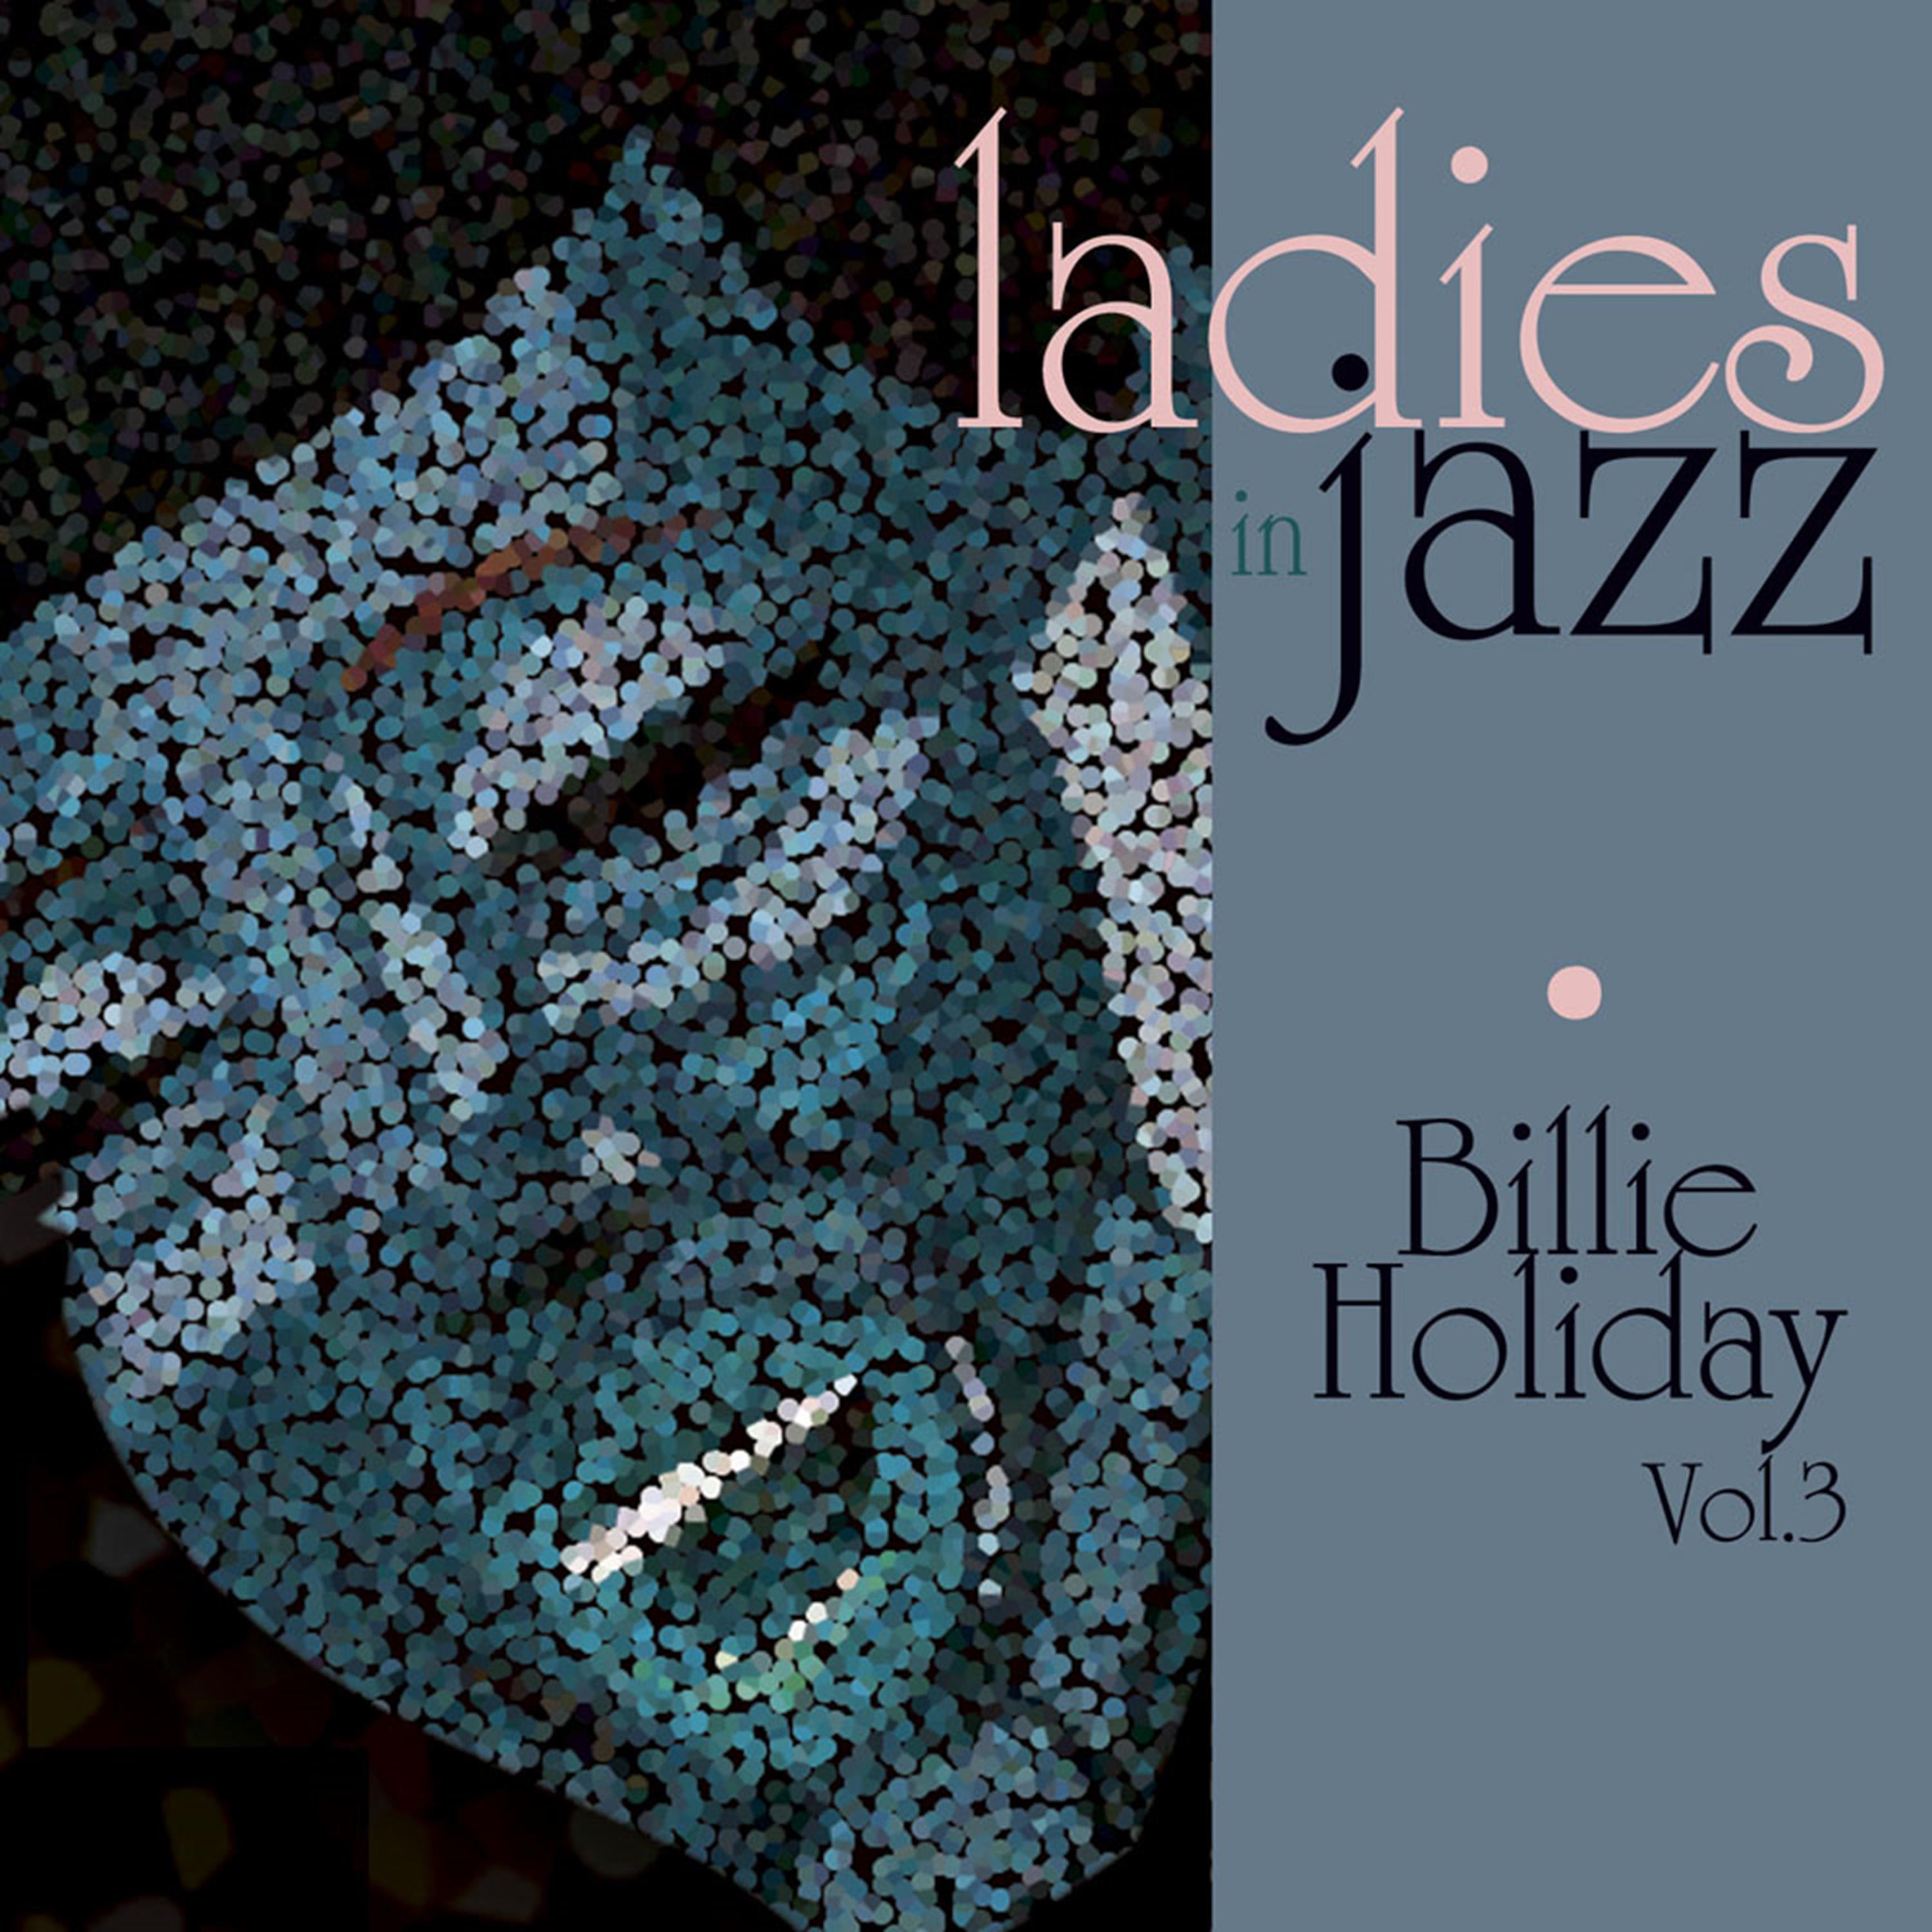 Ladies in Jazz - Billie Holiday, Vol. 3